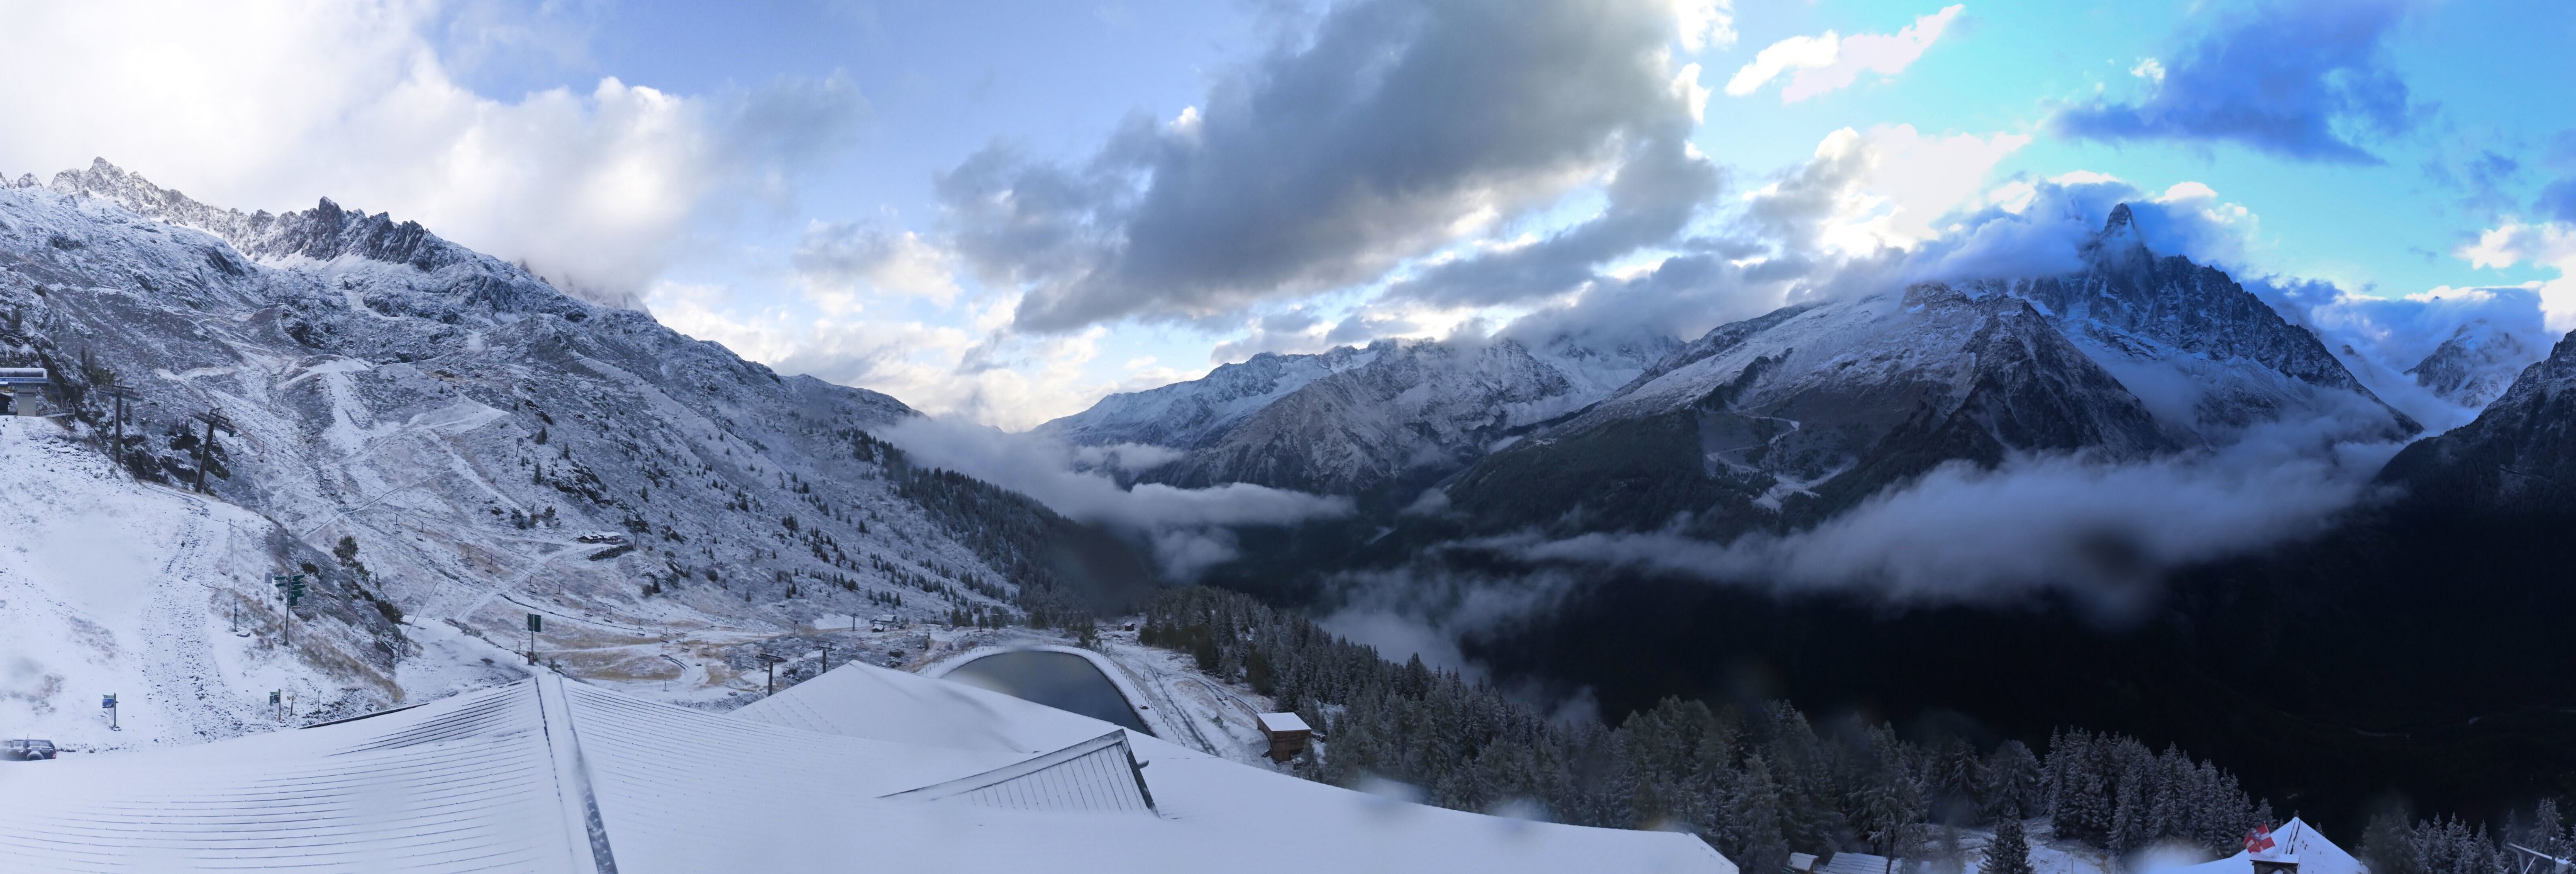 La neige en Haute-Savoie, c'est normal !